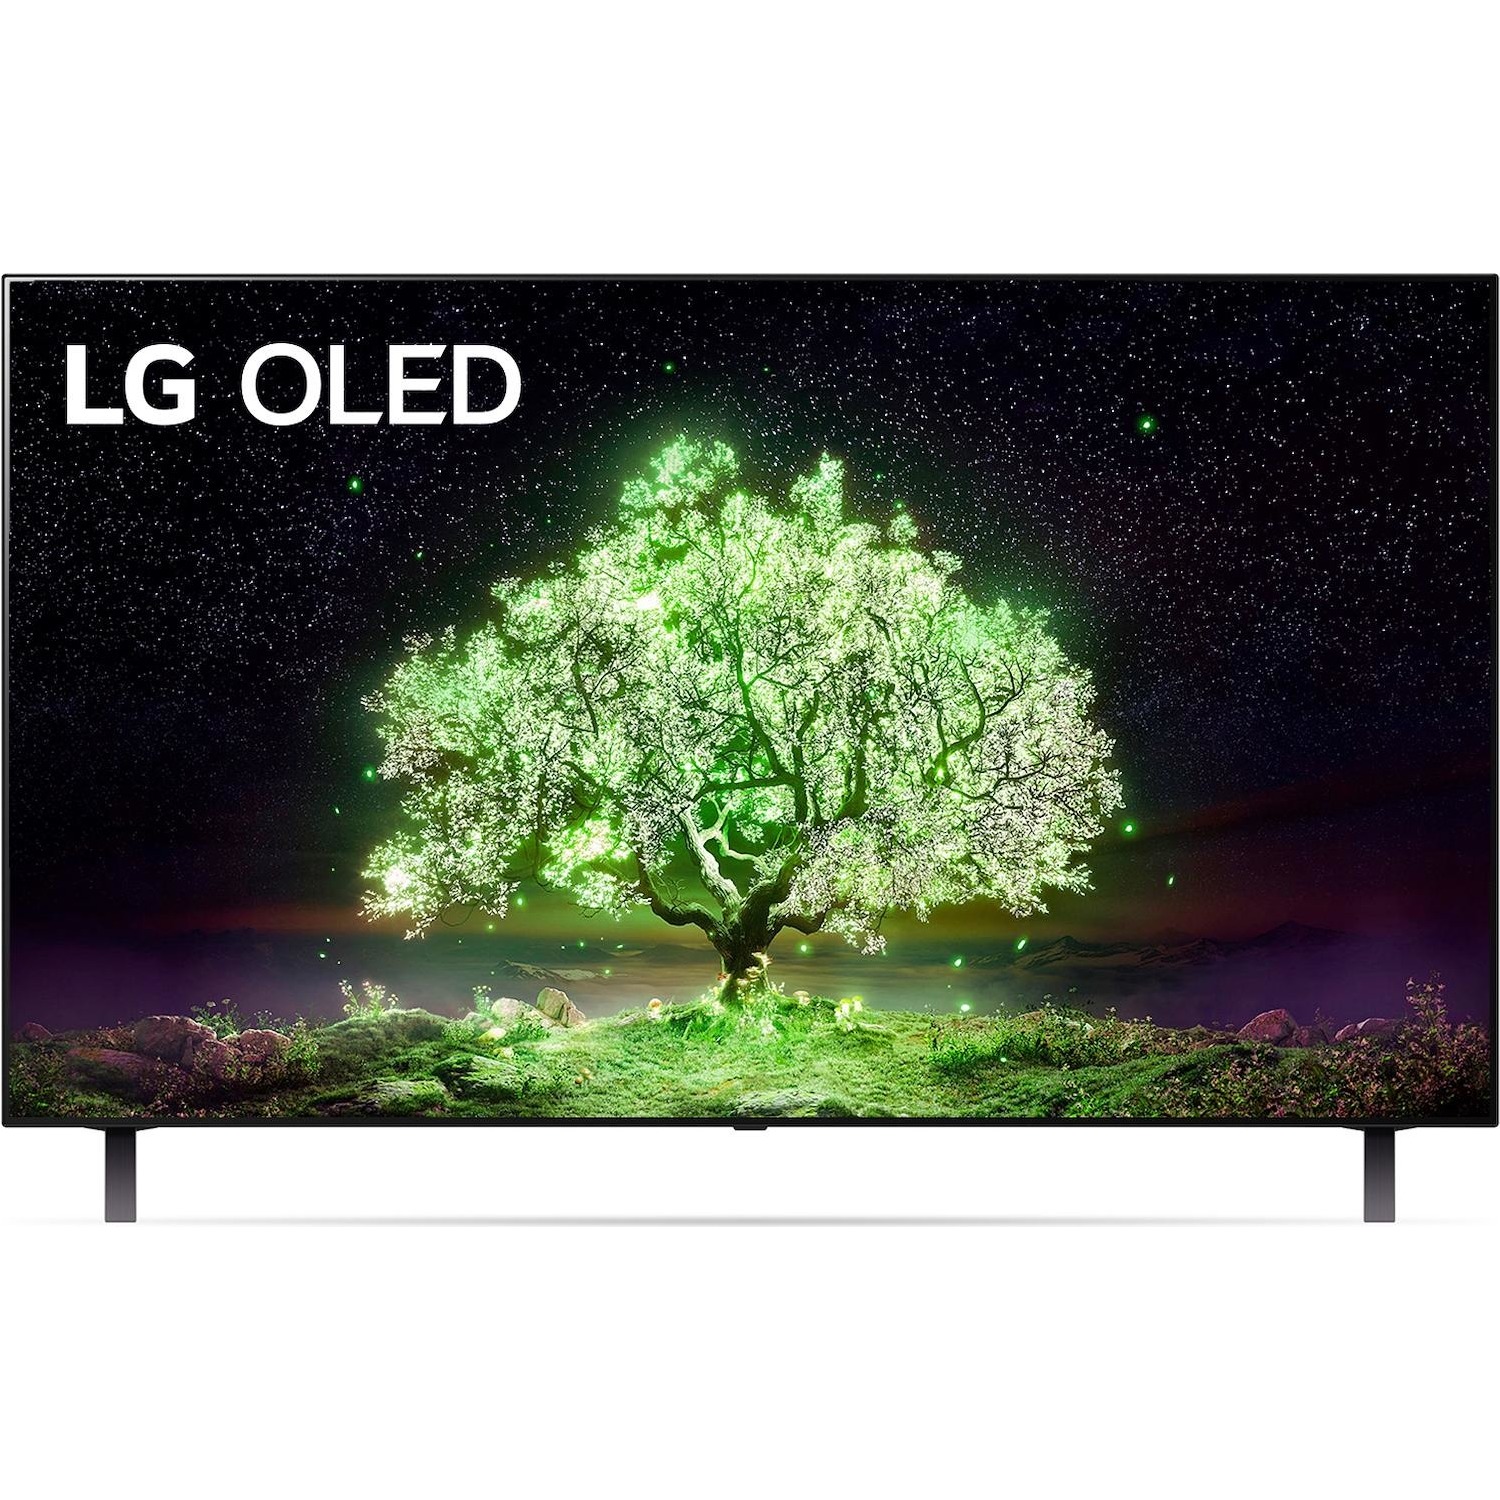 Immagine per TV OLED UHD 4K Smart LG OLED48A16 da DIMOStore